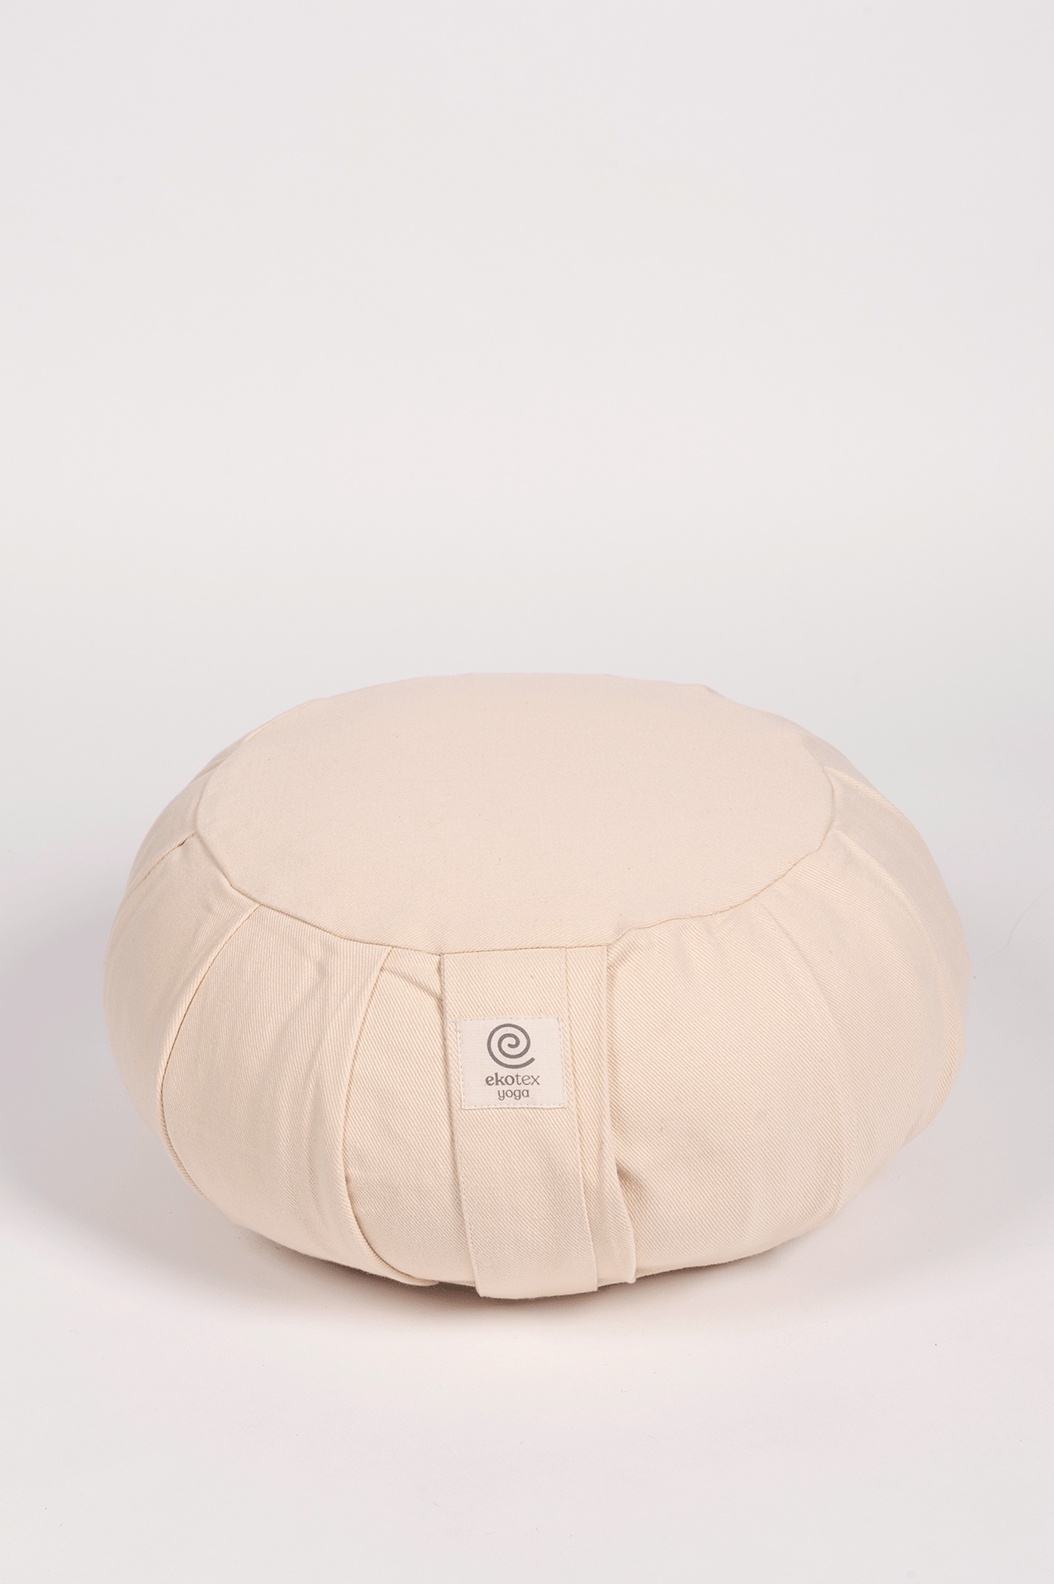 Meditation Cushions Round Zafu Cushion Cover